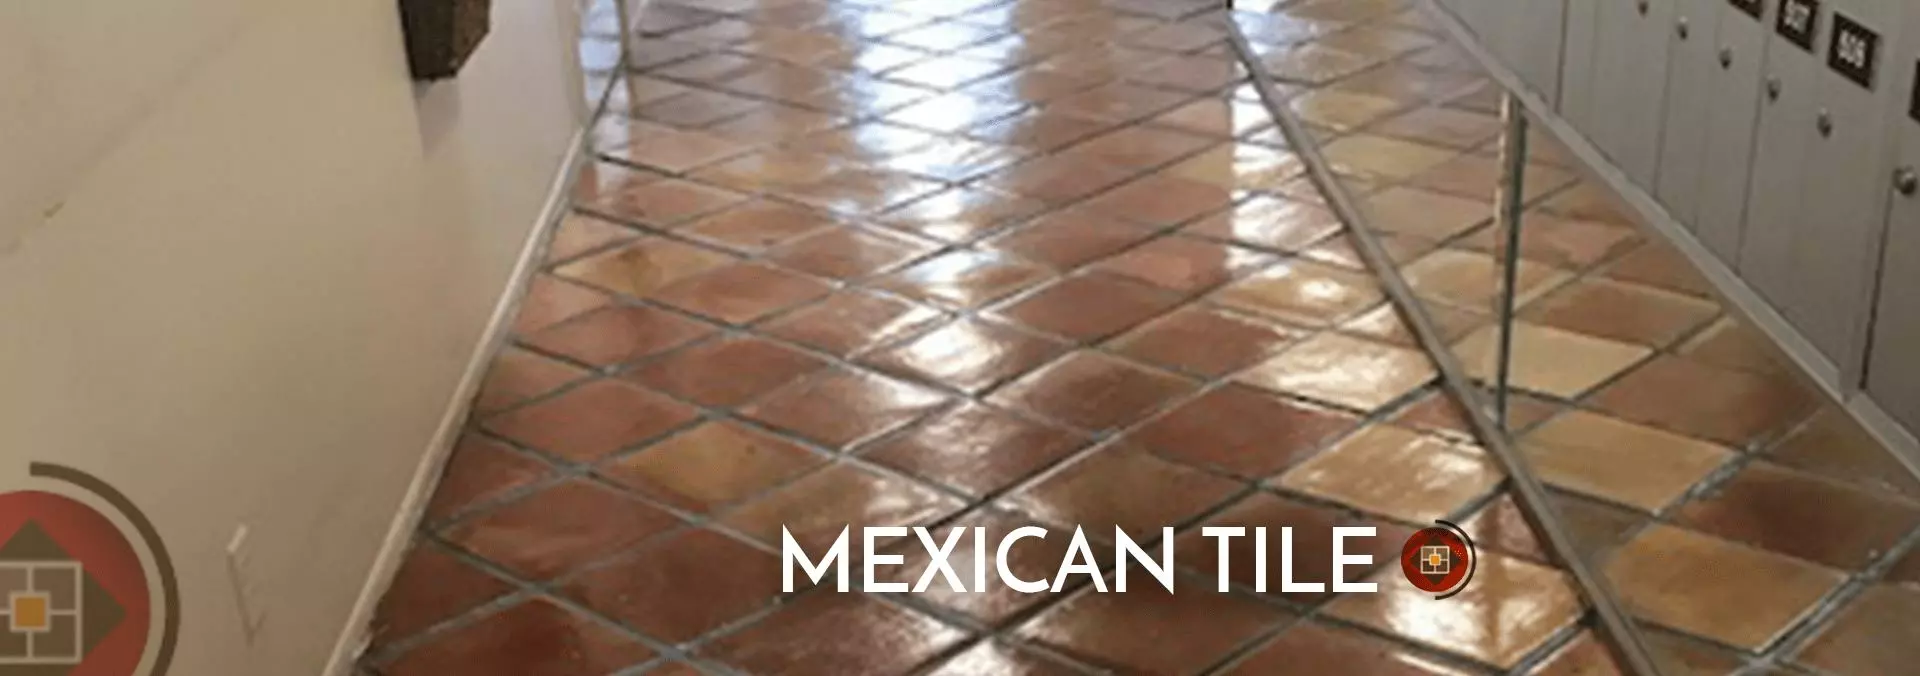 Mexican Tile in Weston Florida